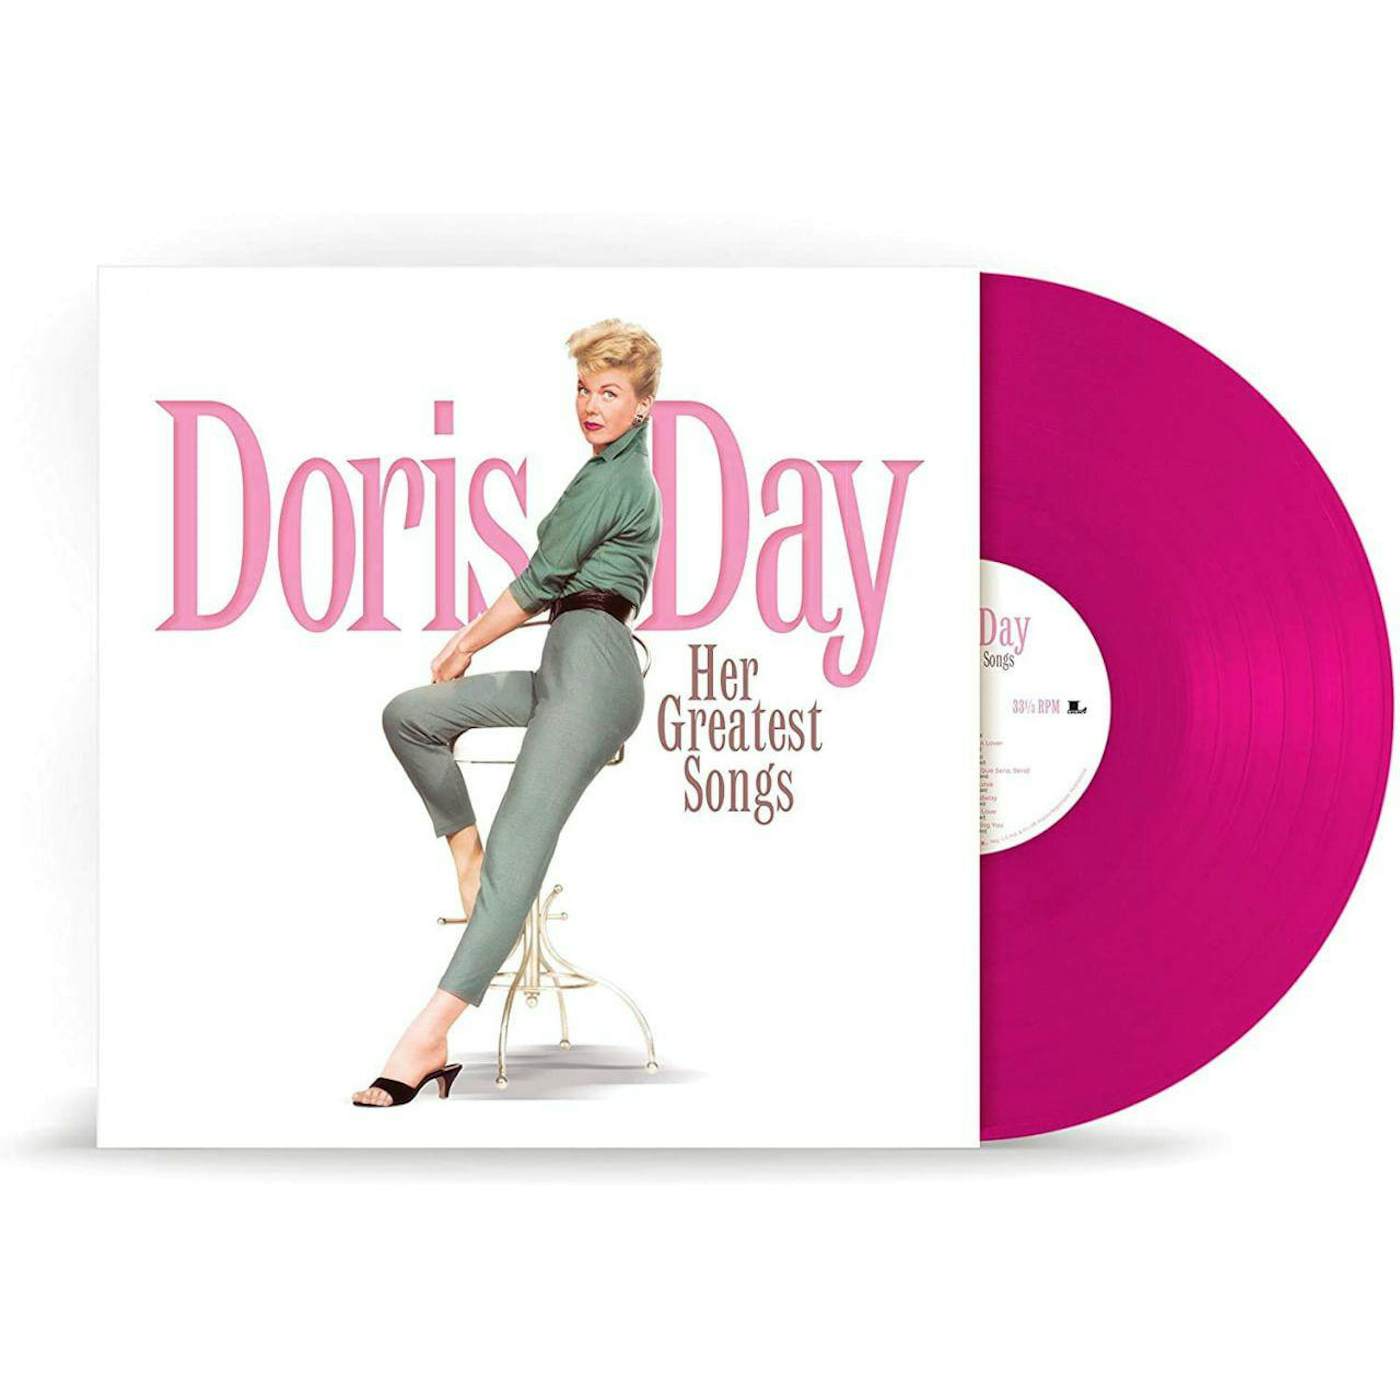 Doris Day LP Vinyl Record - Her Greatest Hits (Pink Vinyl)